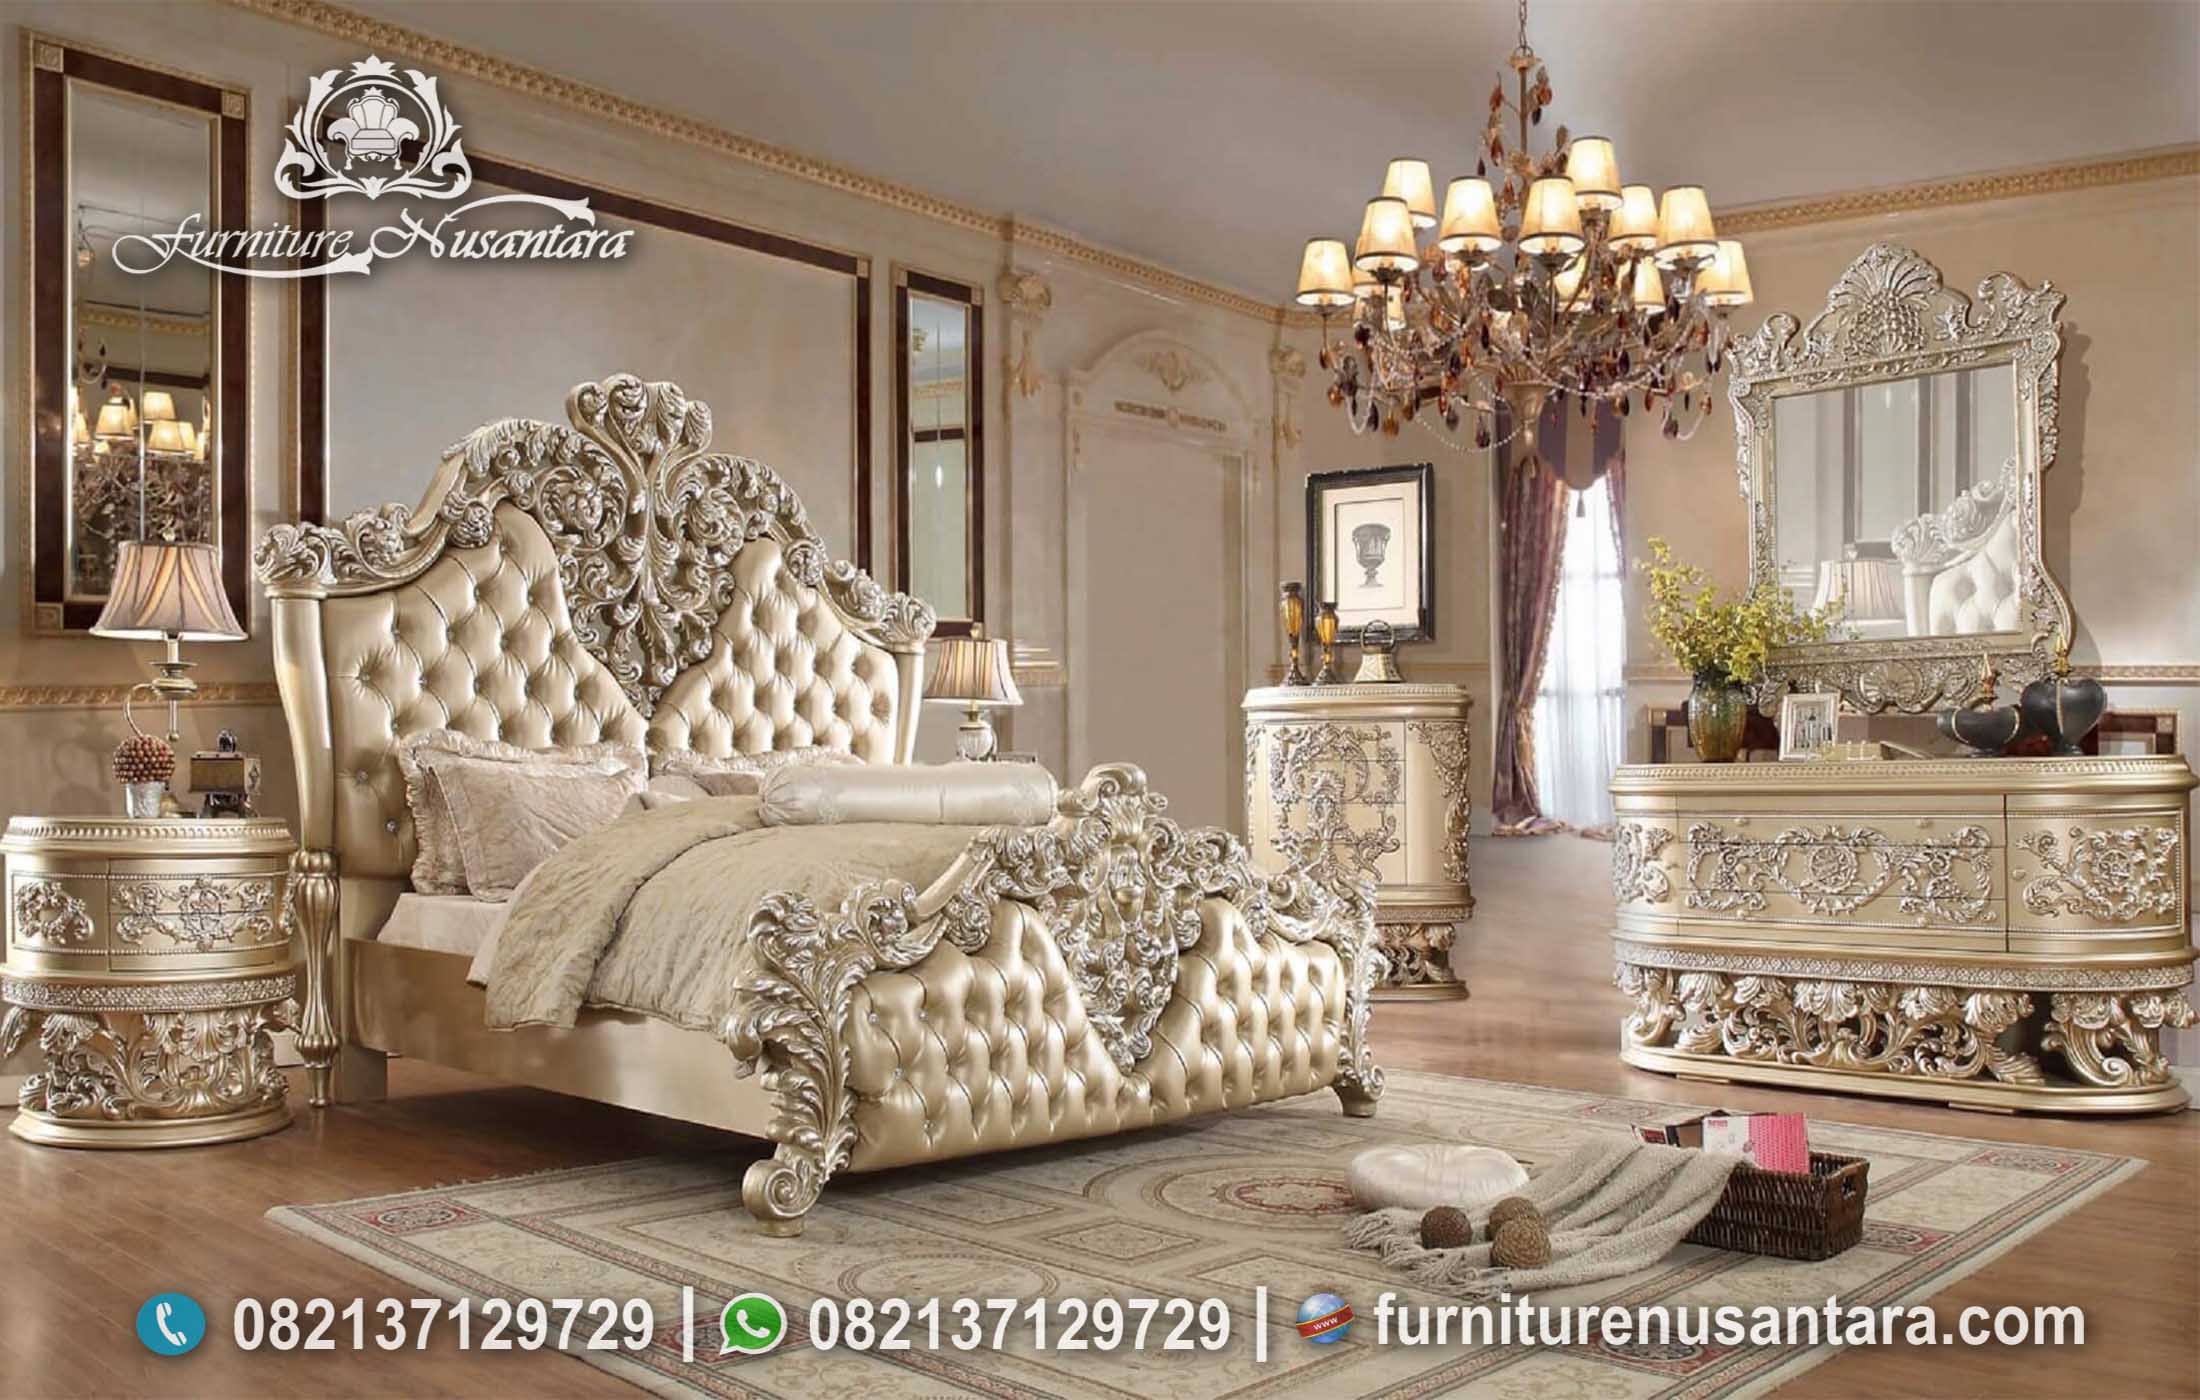 Desain Bedroom Luxury King Size Mewah KS-175, Furniture Nusantara